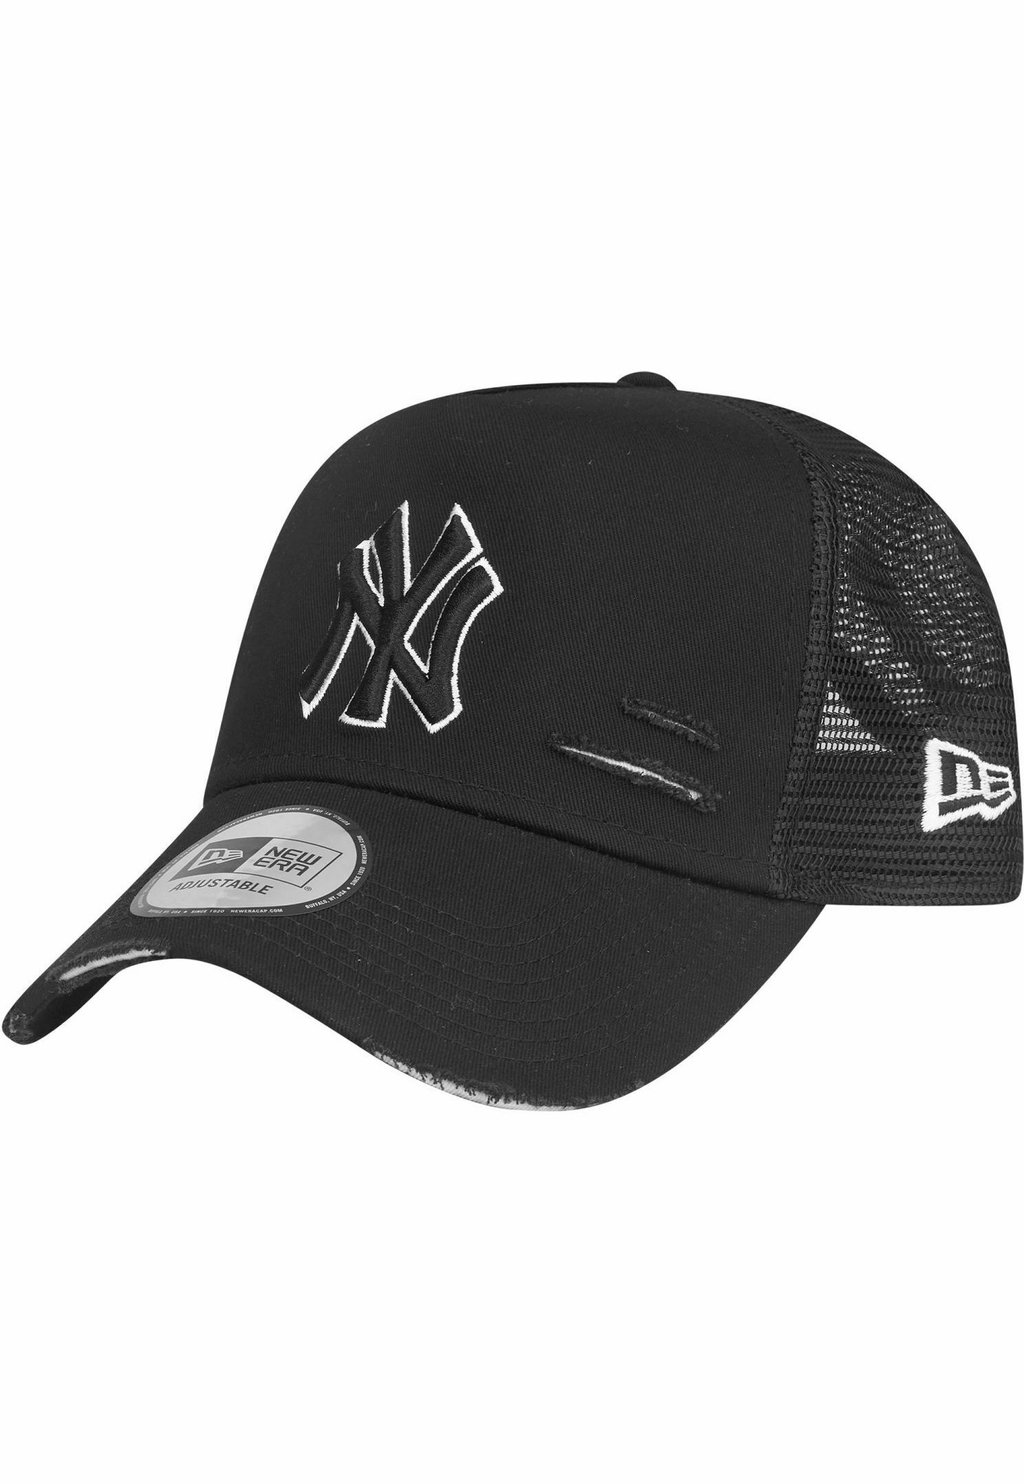 Бейсболка TRUCKER DISTRESSED NEW YORK YANKEES New Era, цвет black white